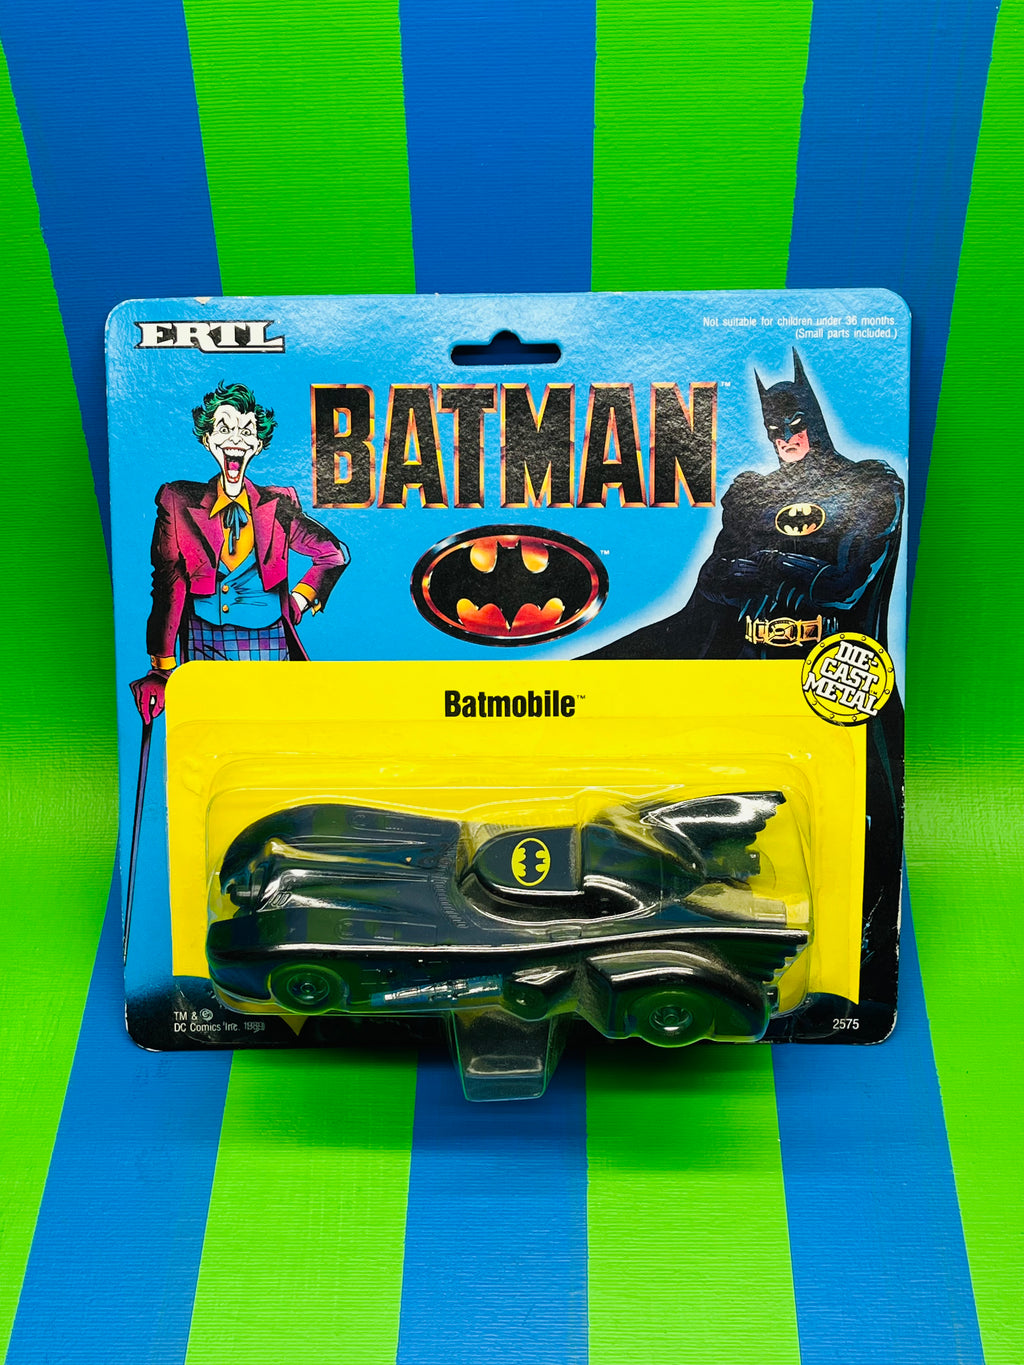 ERTL Batman Batmobile from 1989